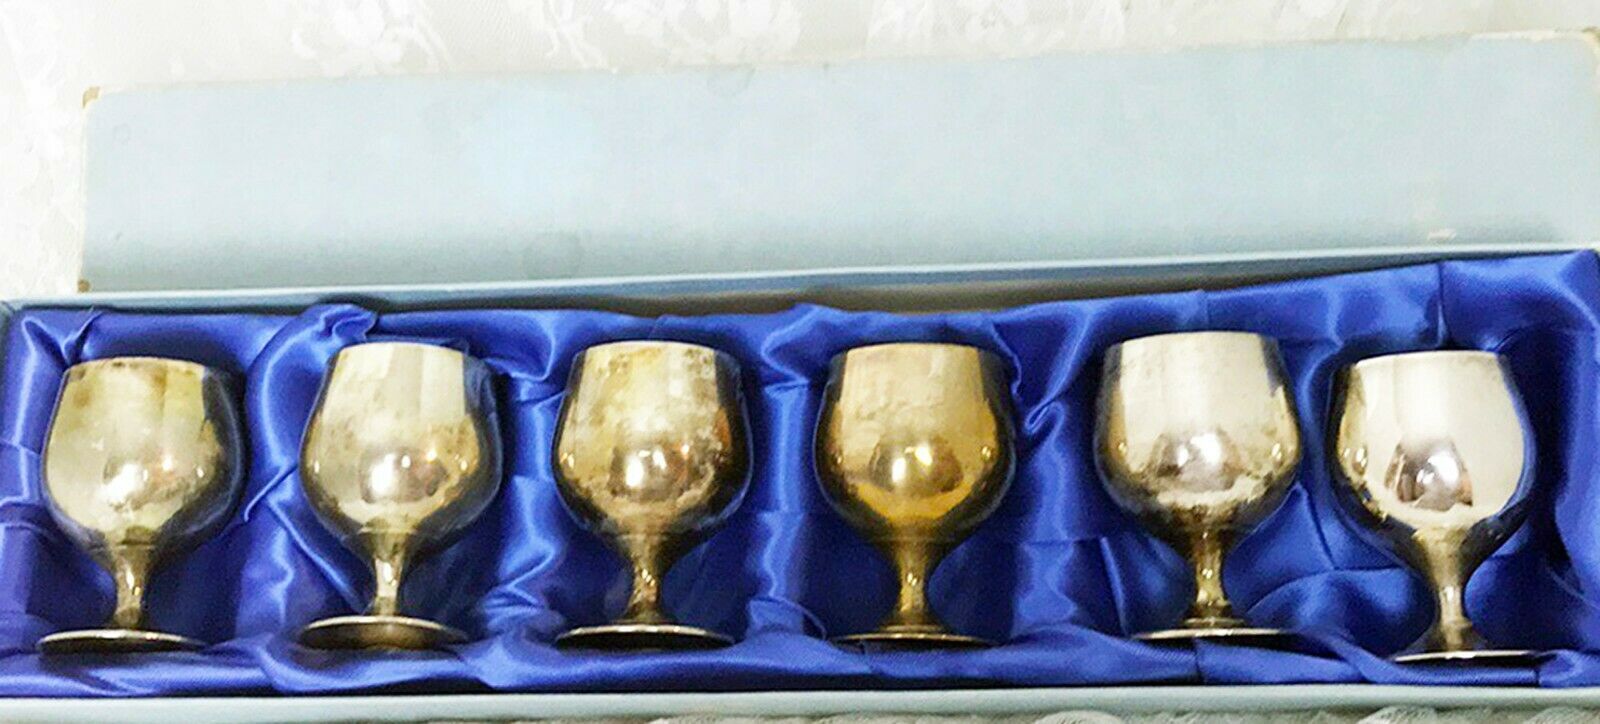 Set of 6 Silver Plate Cordial Liqueur Shot Stem Goblet Glasses Tray Grape Leaves Pattern Vintage